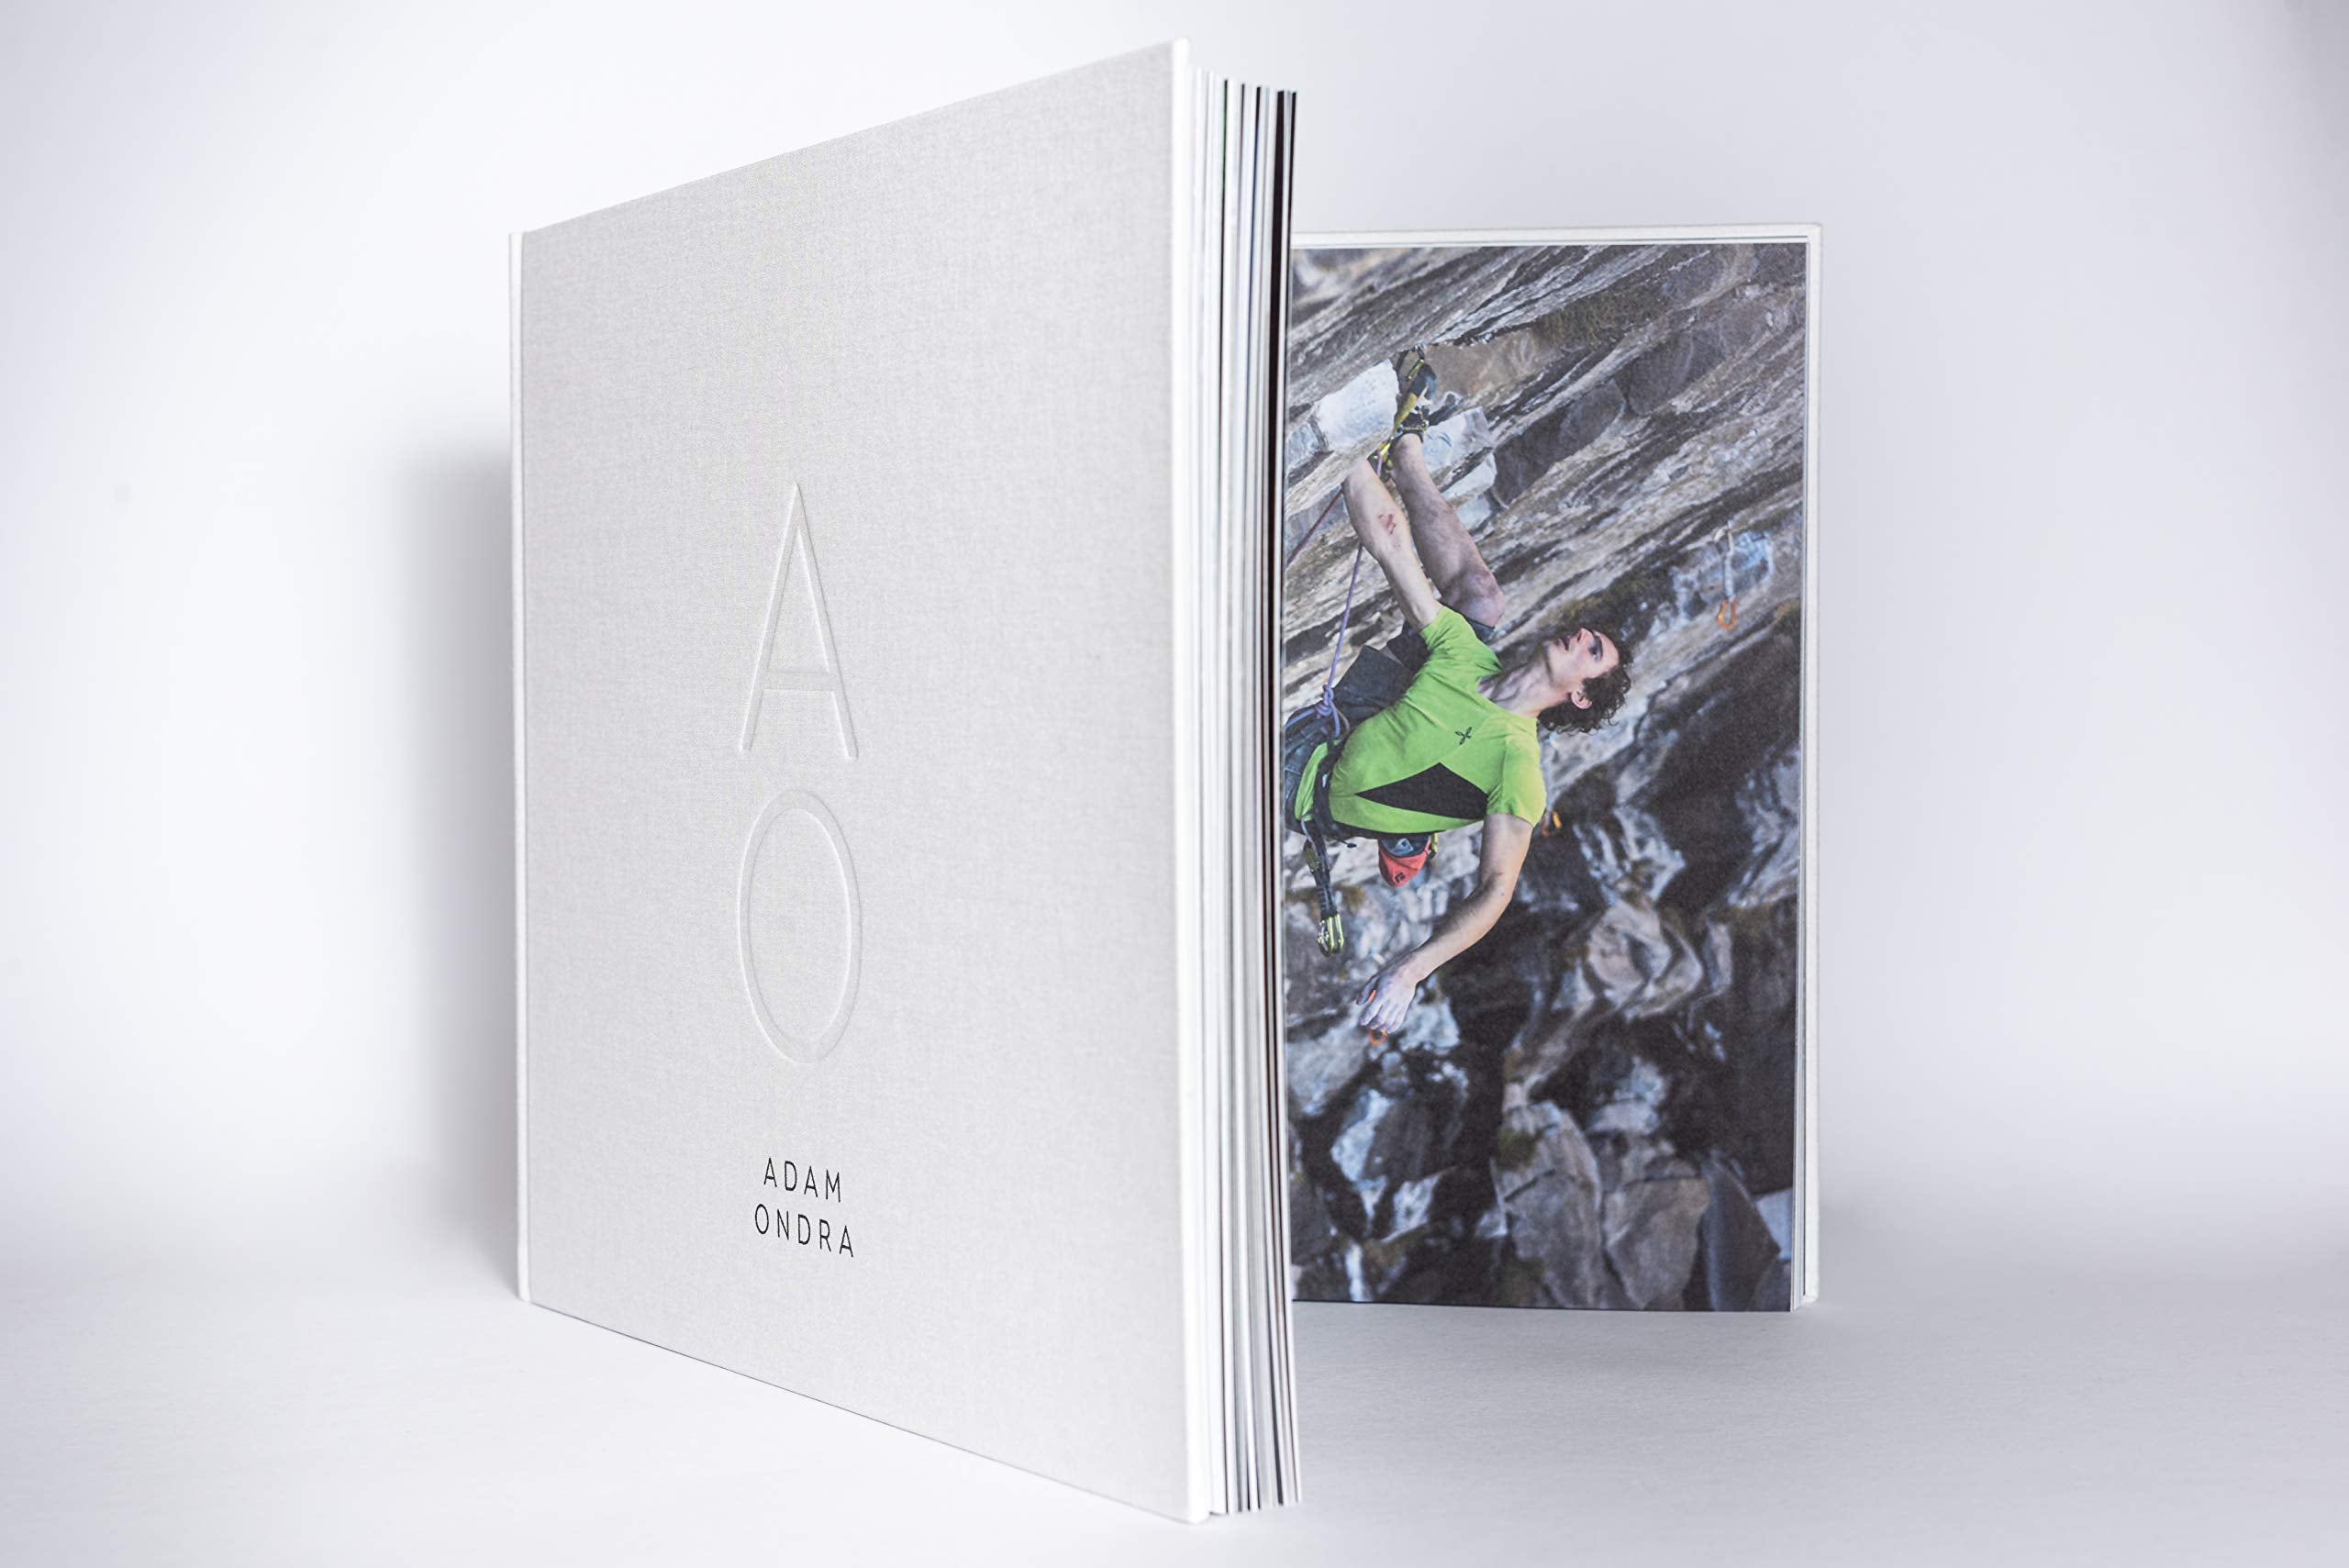 Adam Ondra, photo book